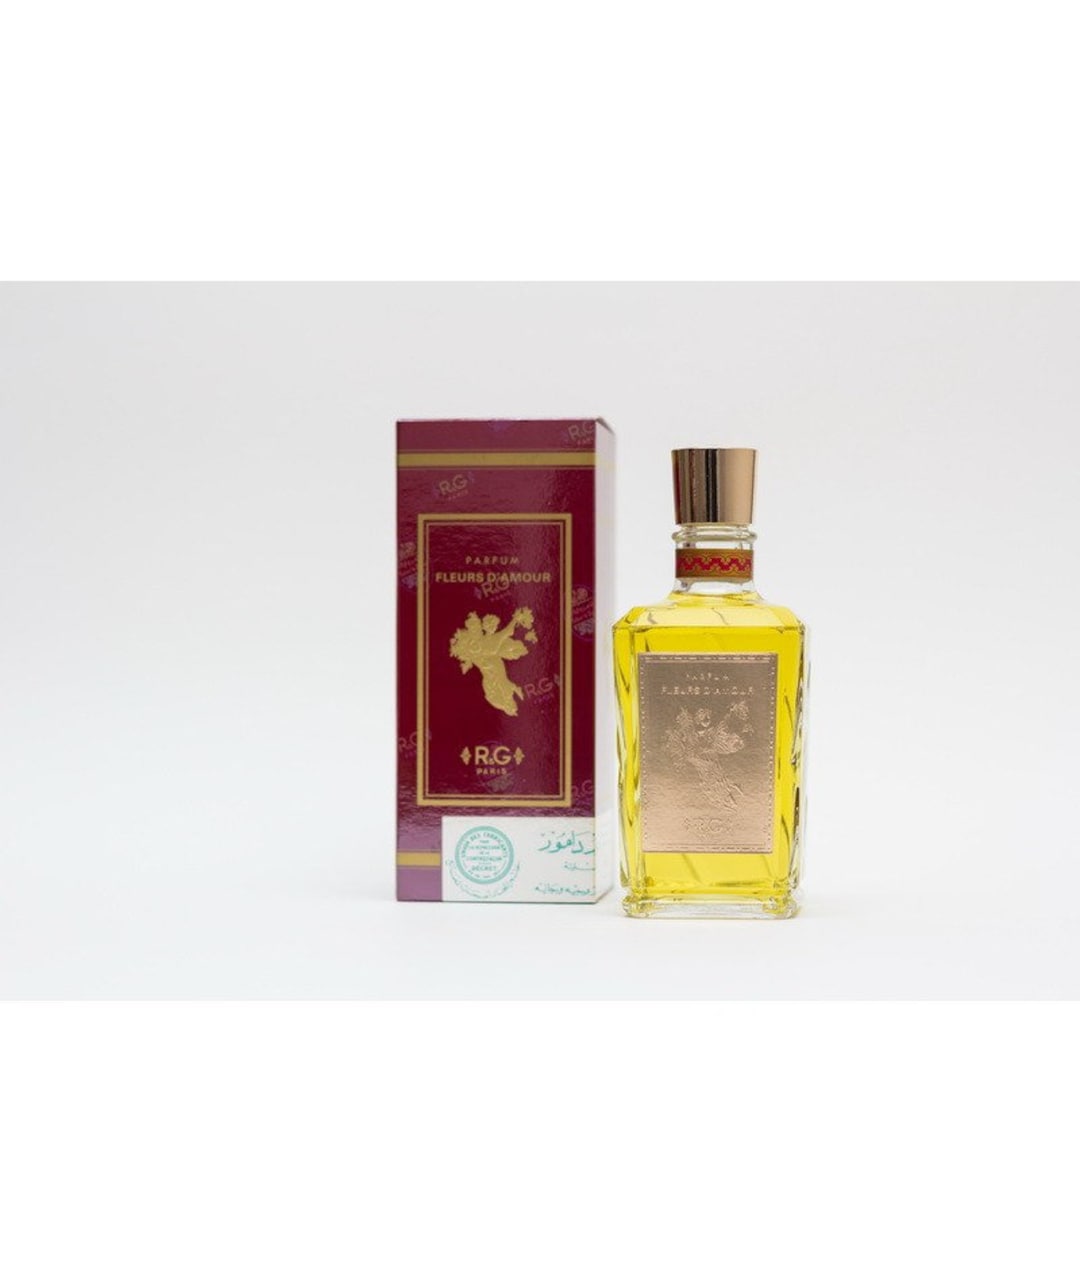 Fleur Damour Vintage Perfume فلوردمور -  Canada